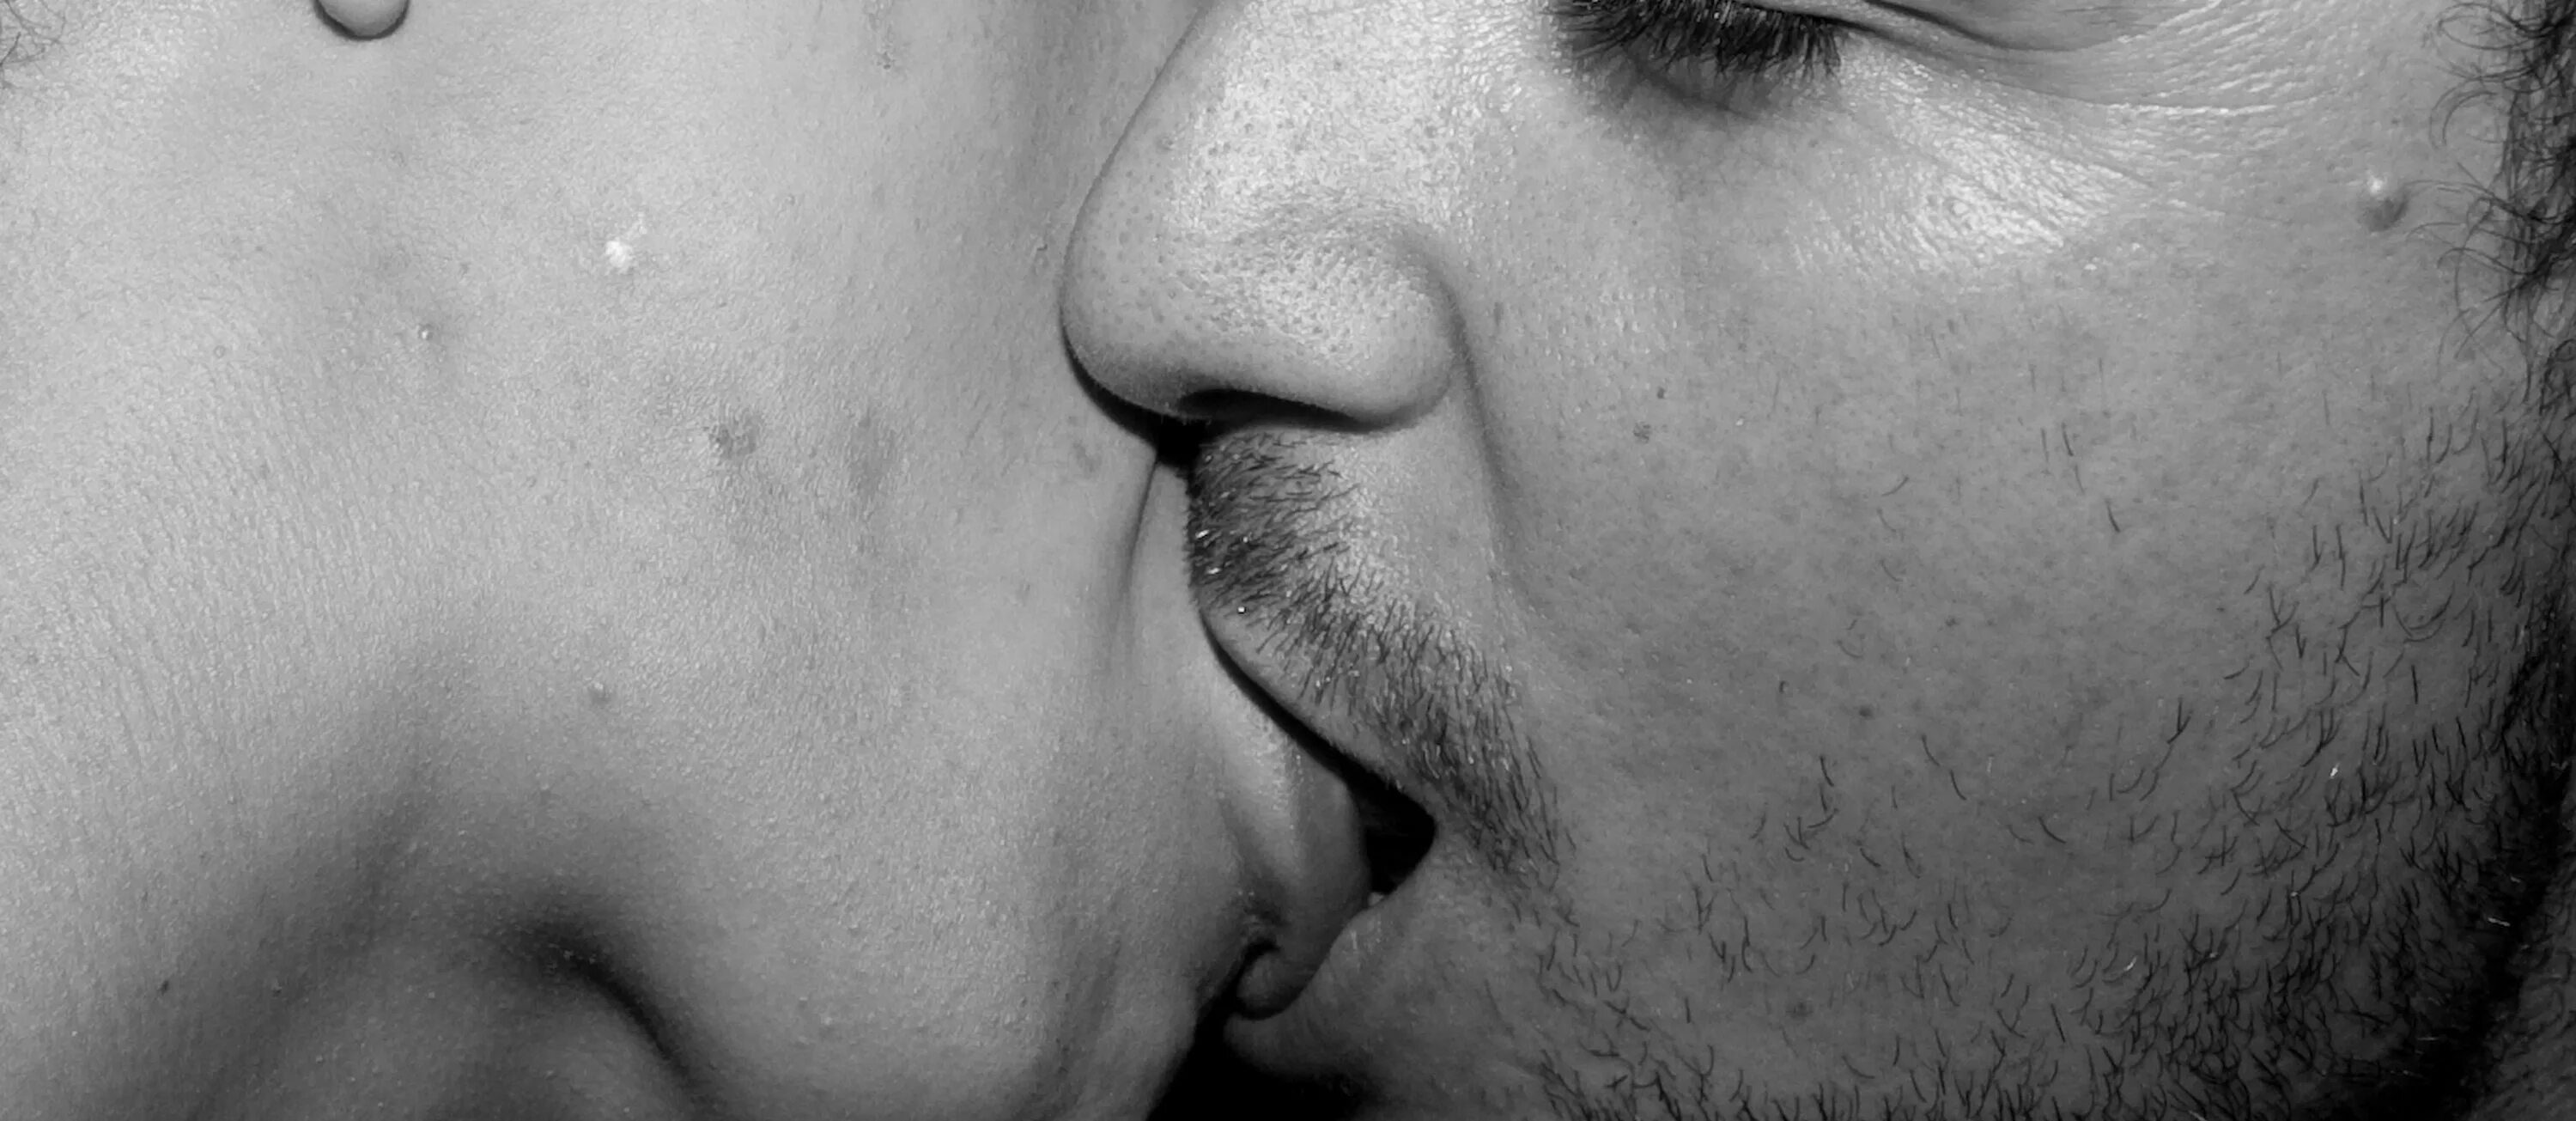 Лижет парню лицо. Поцелуй вблизи. Поцелуй крупно. Мужской поцелуй. Поцелуй с языком.